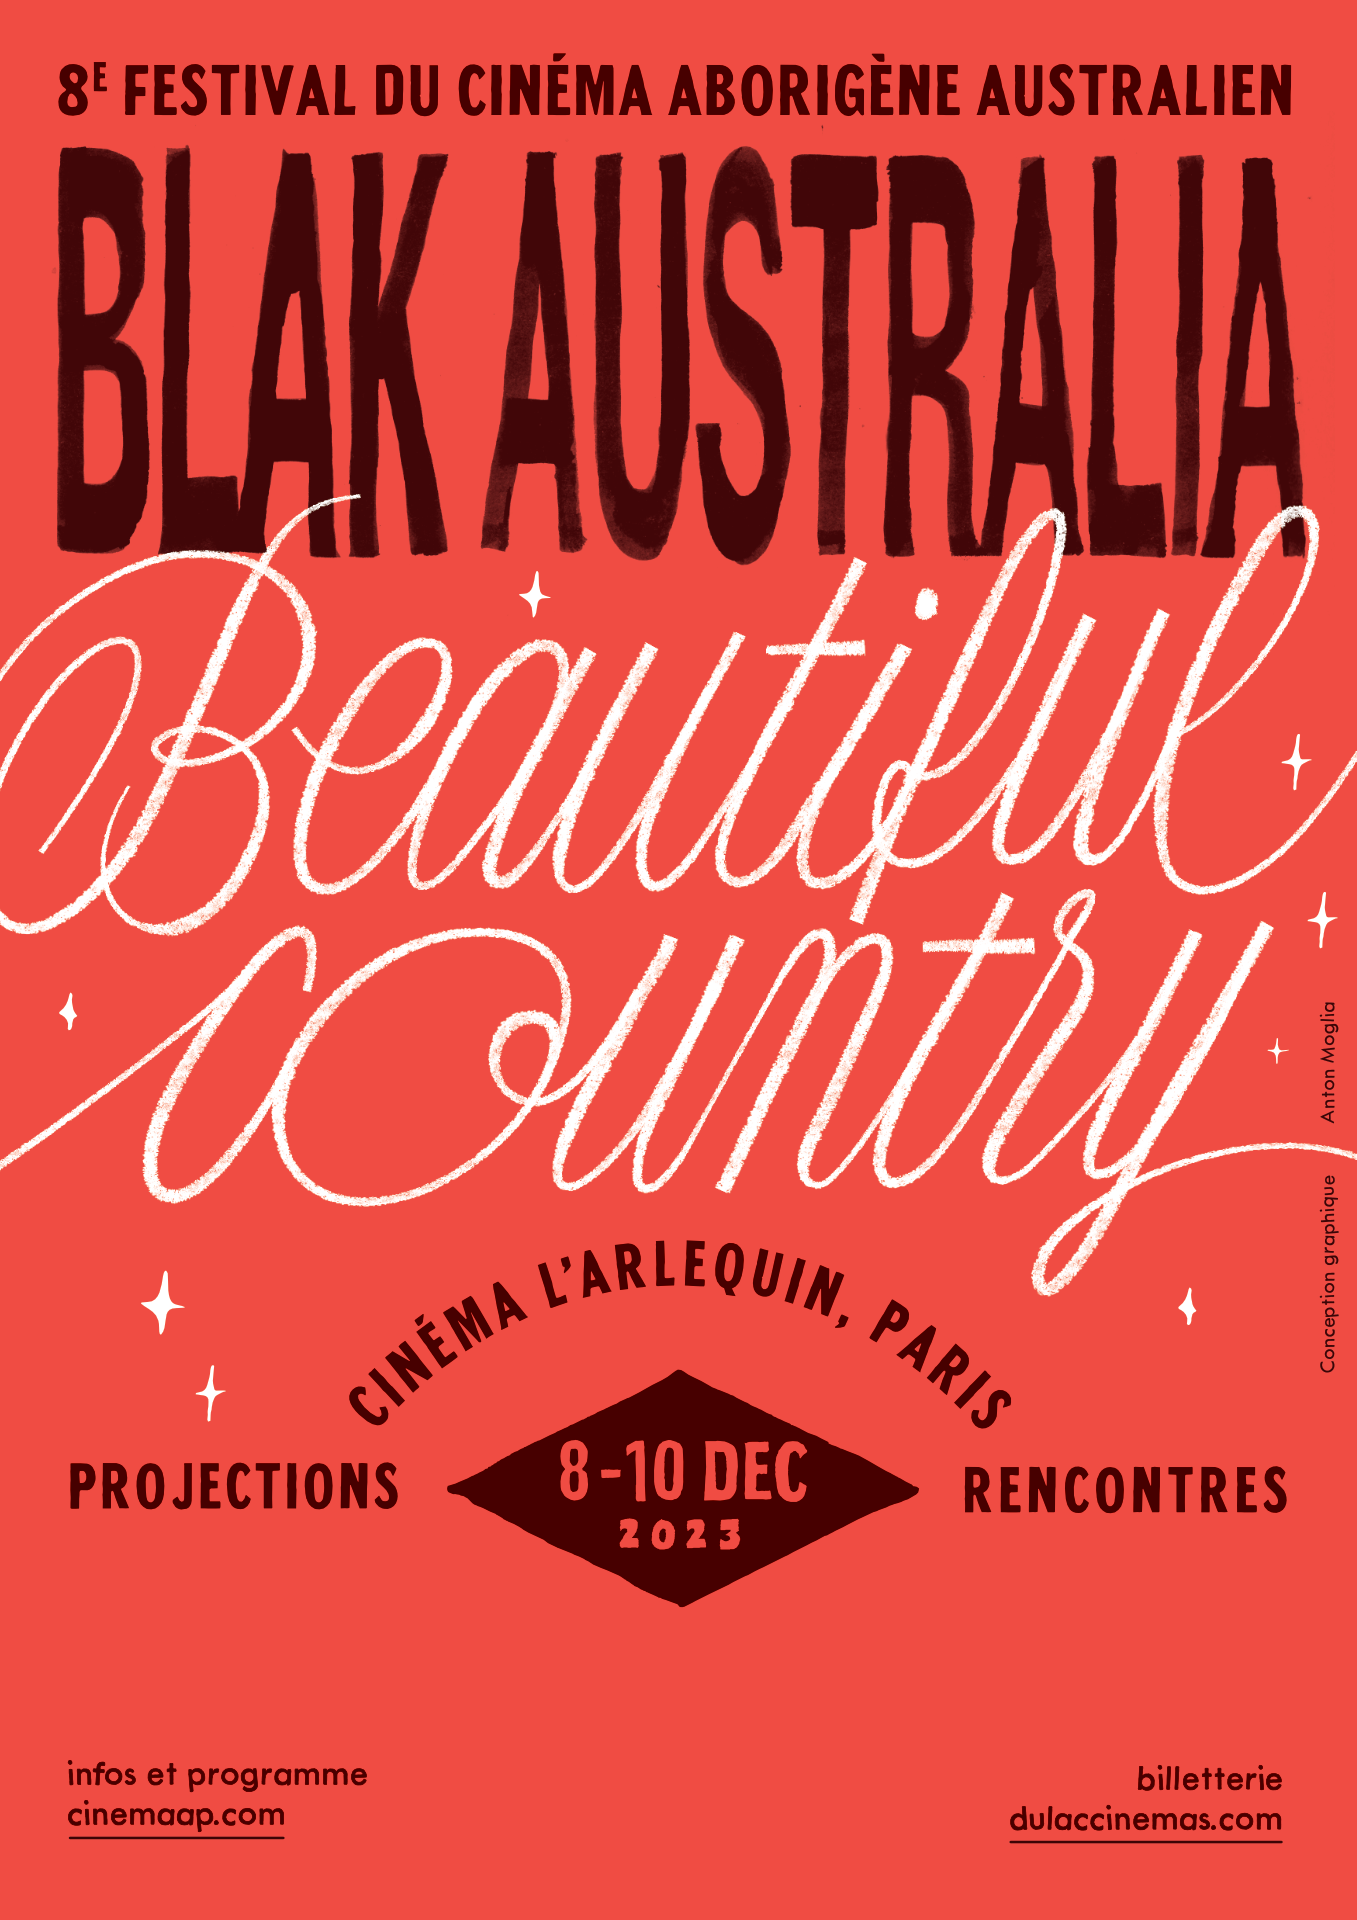 Blak Australia Beautiful Country 2023